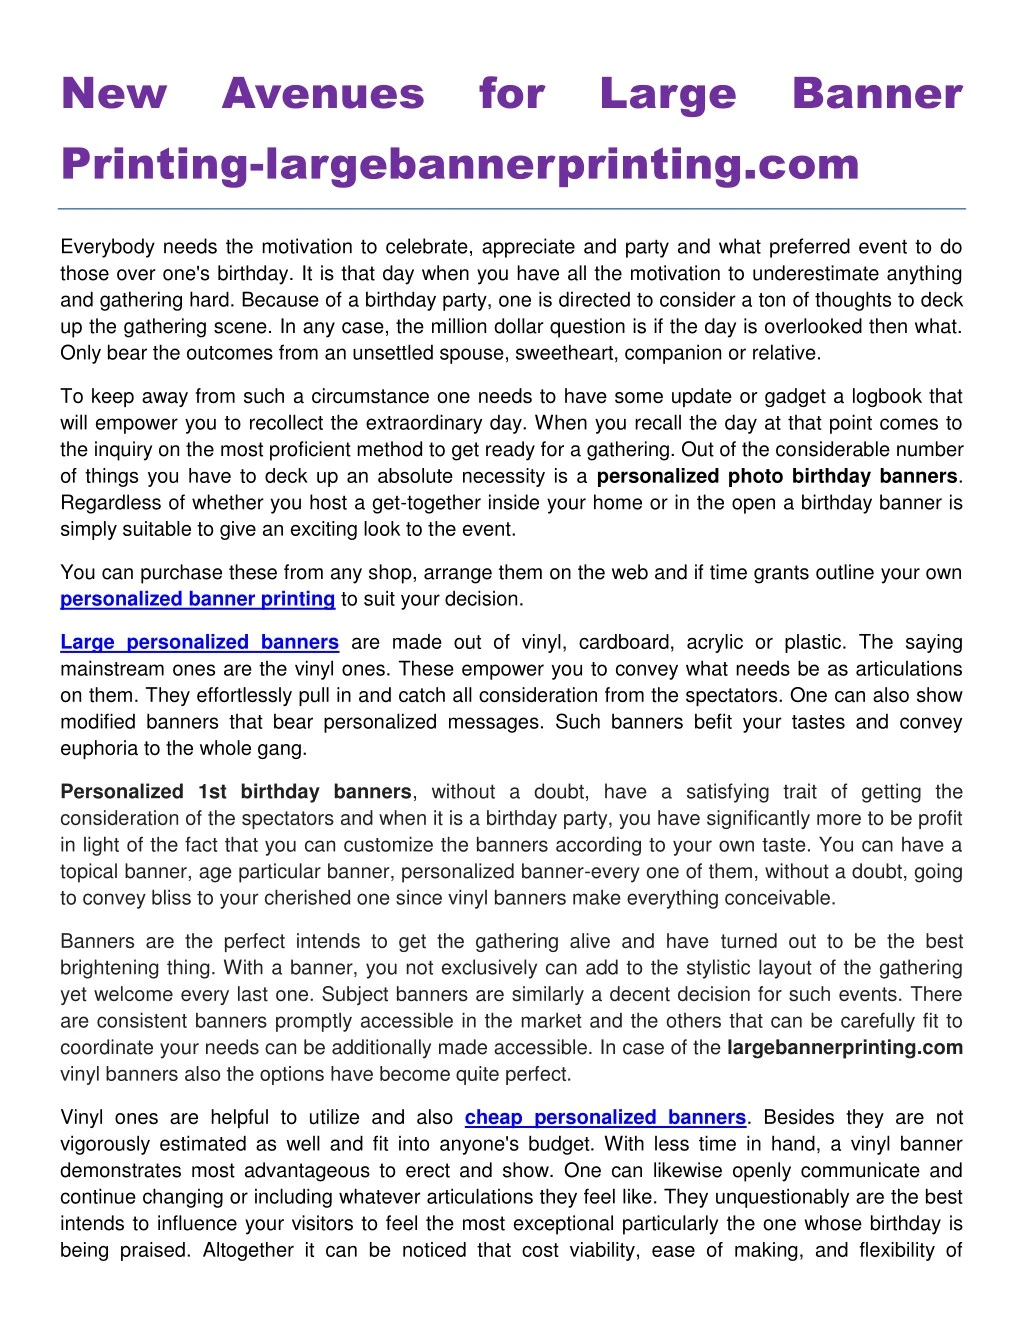 new printing largebannerprinting com